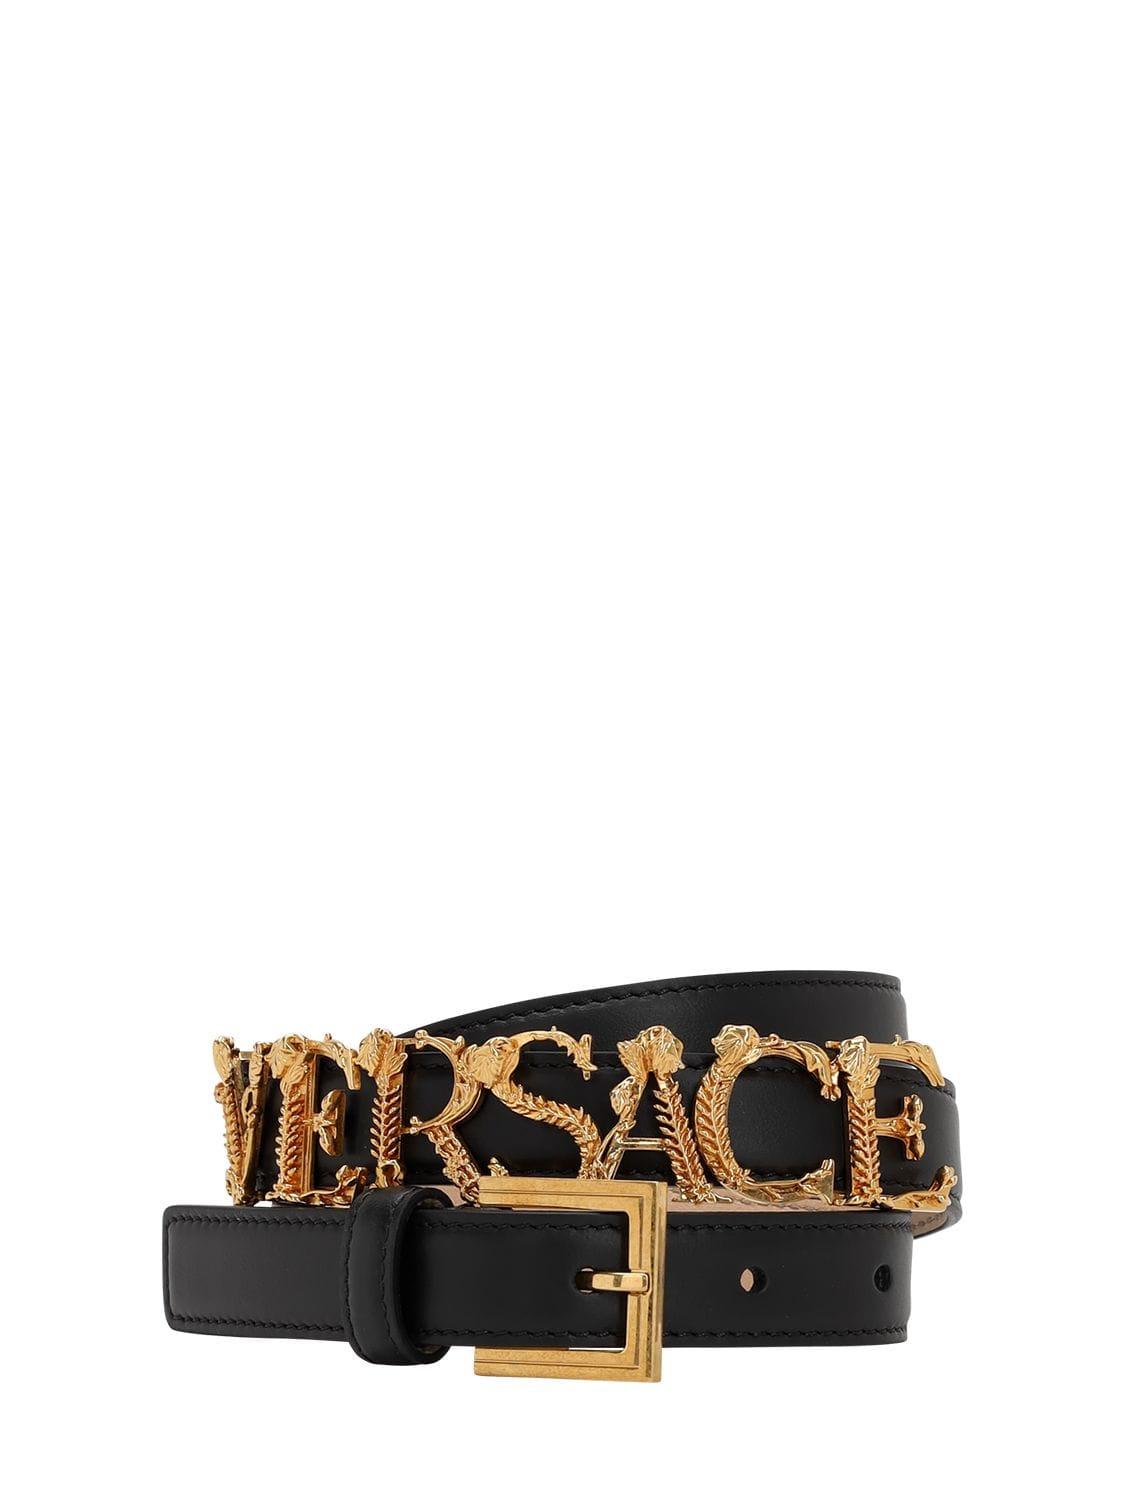 Versace 20mm Gold Logo Leather Belt in Black - Lyst